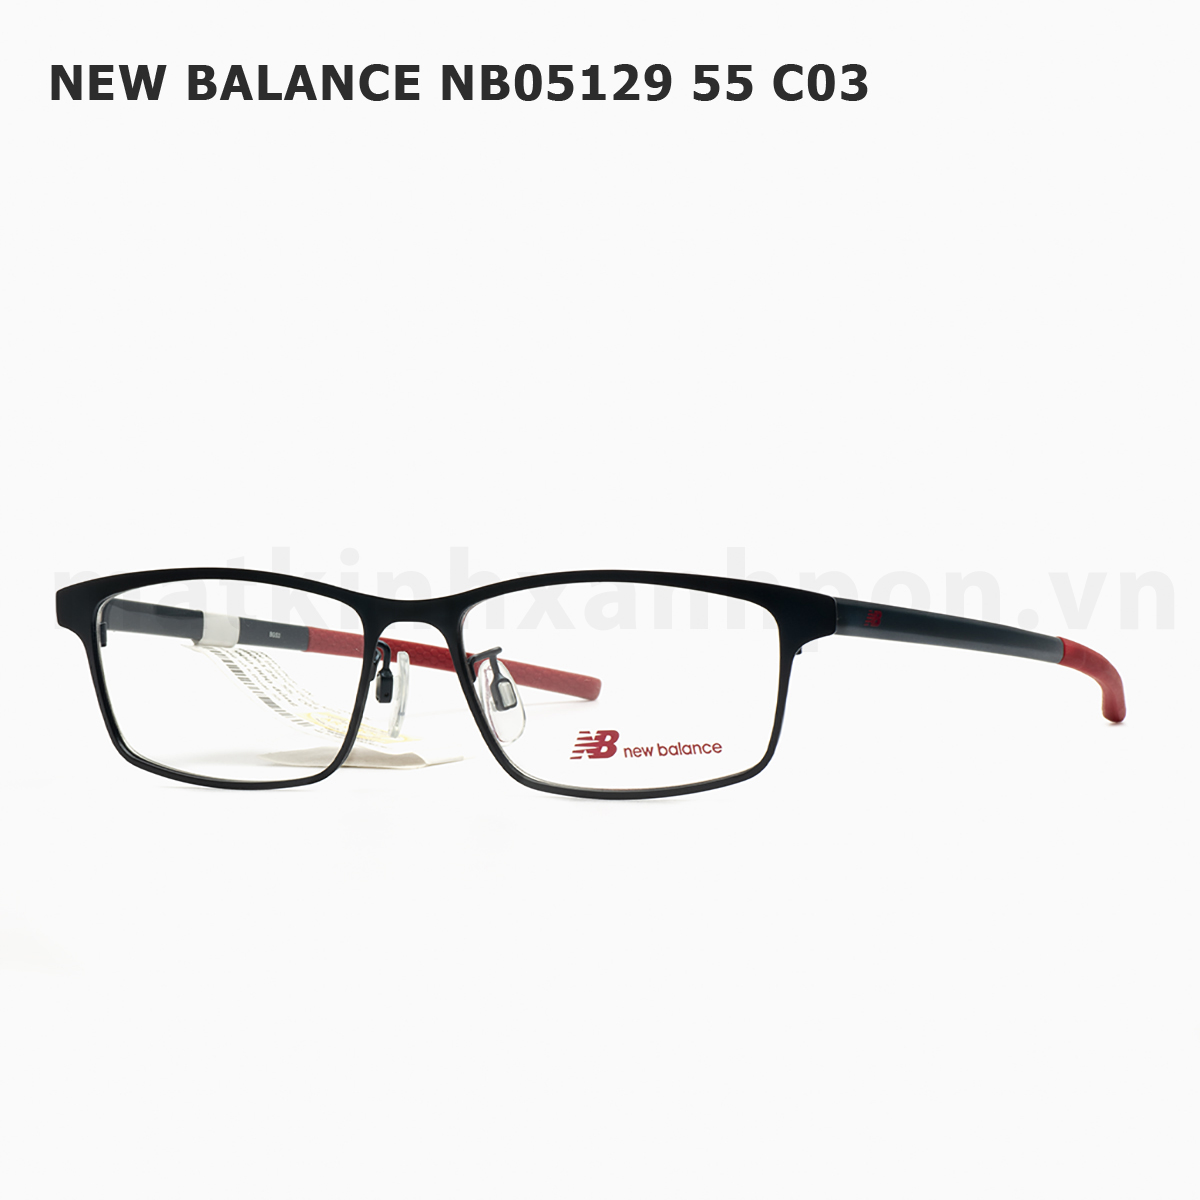 New Balance NB05129 55 C03